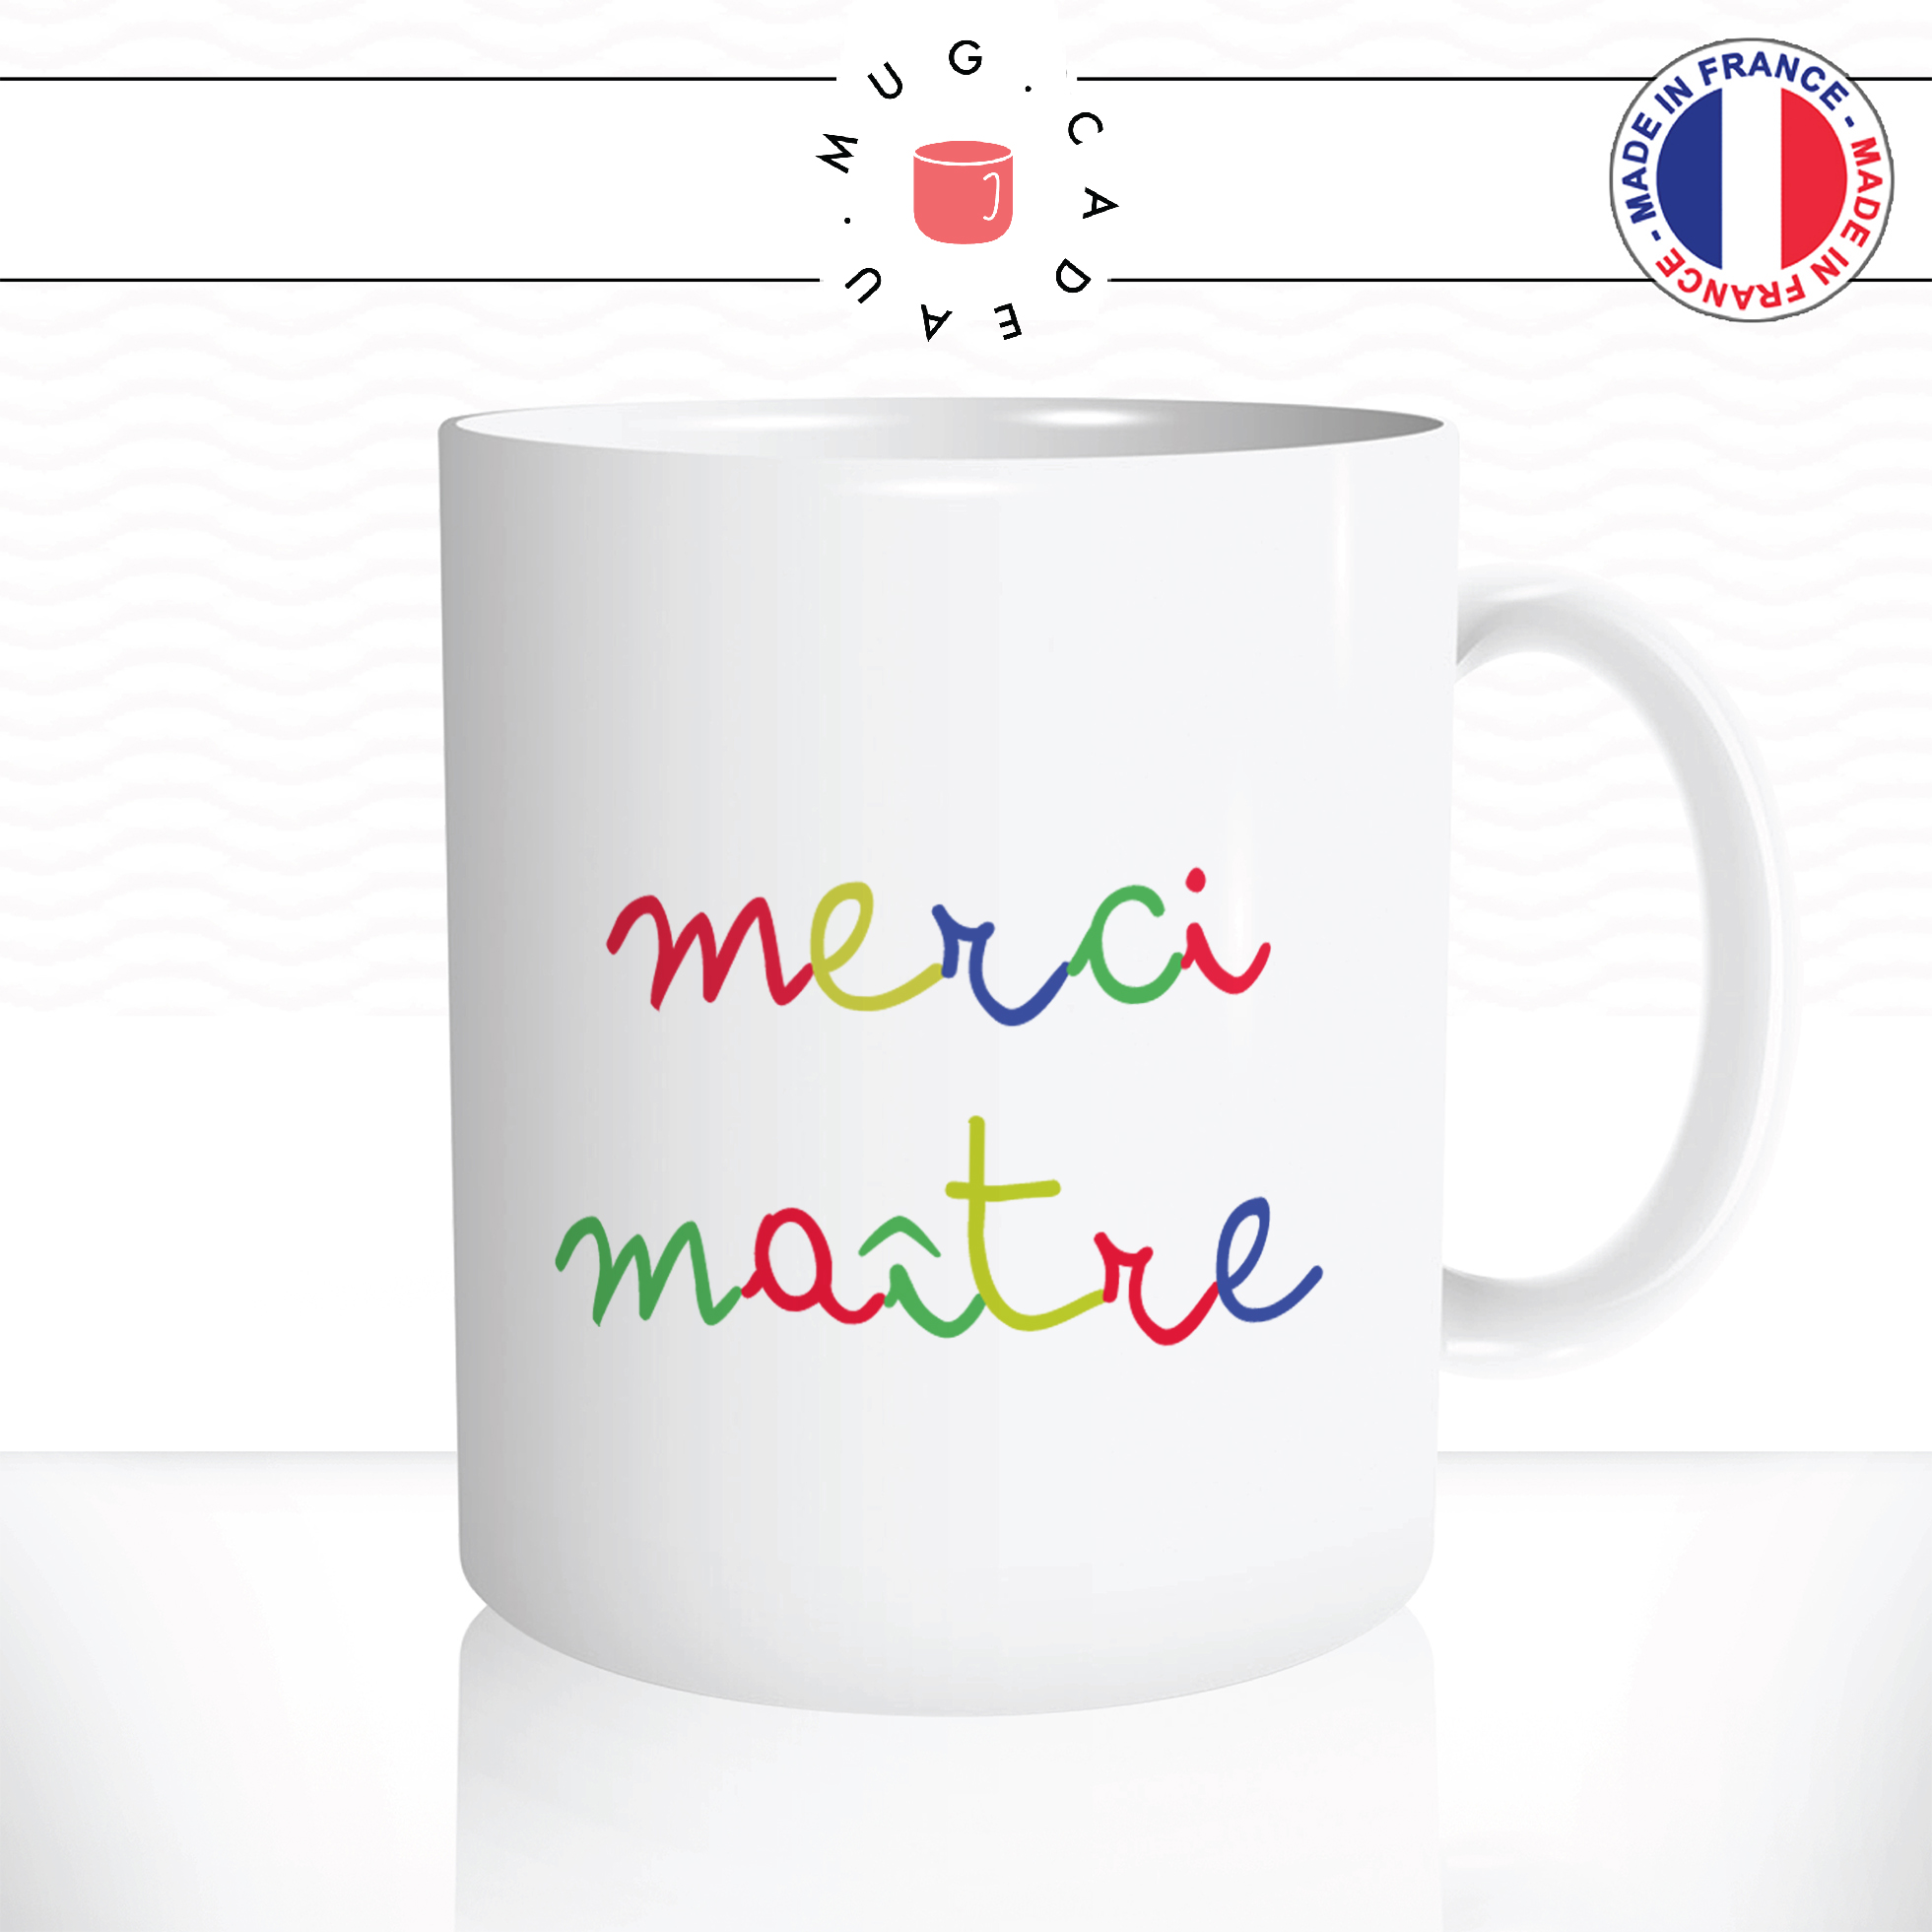 mug-tasse-ref3-fin-annee-scolaire-merci-maitre-couleurs-cafe-the-mugs-tasses-personnalise-anse-droite